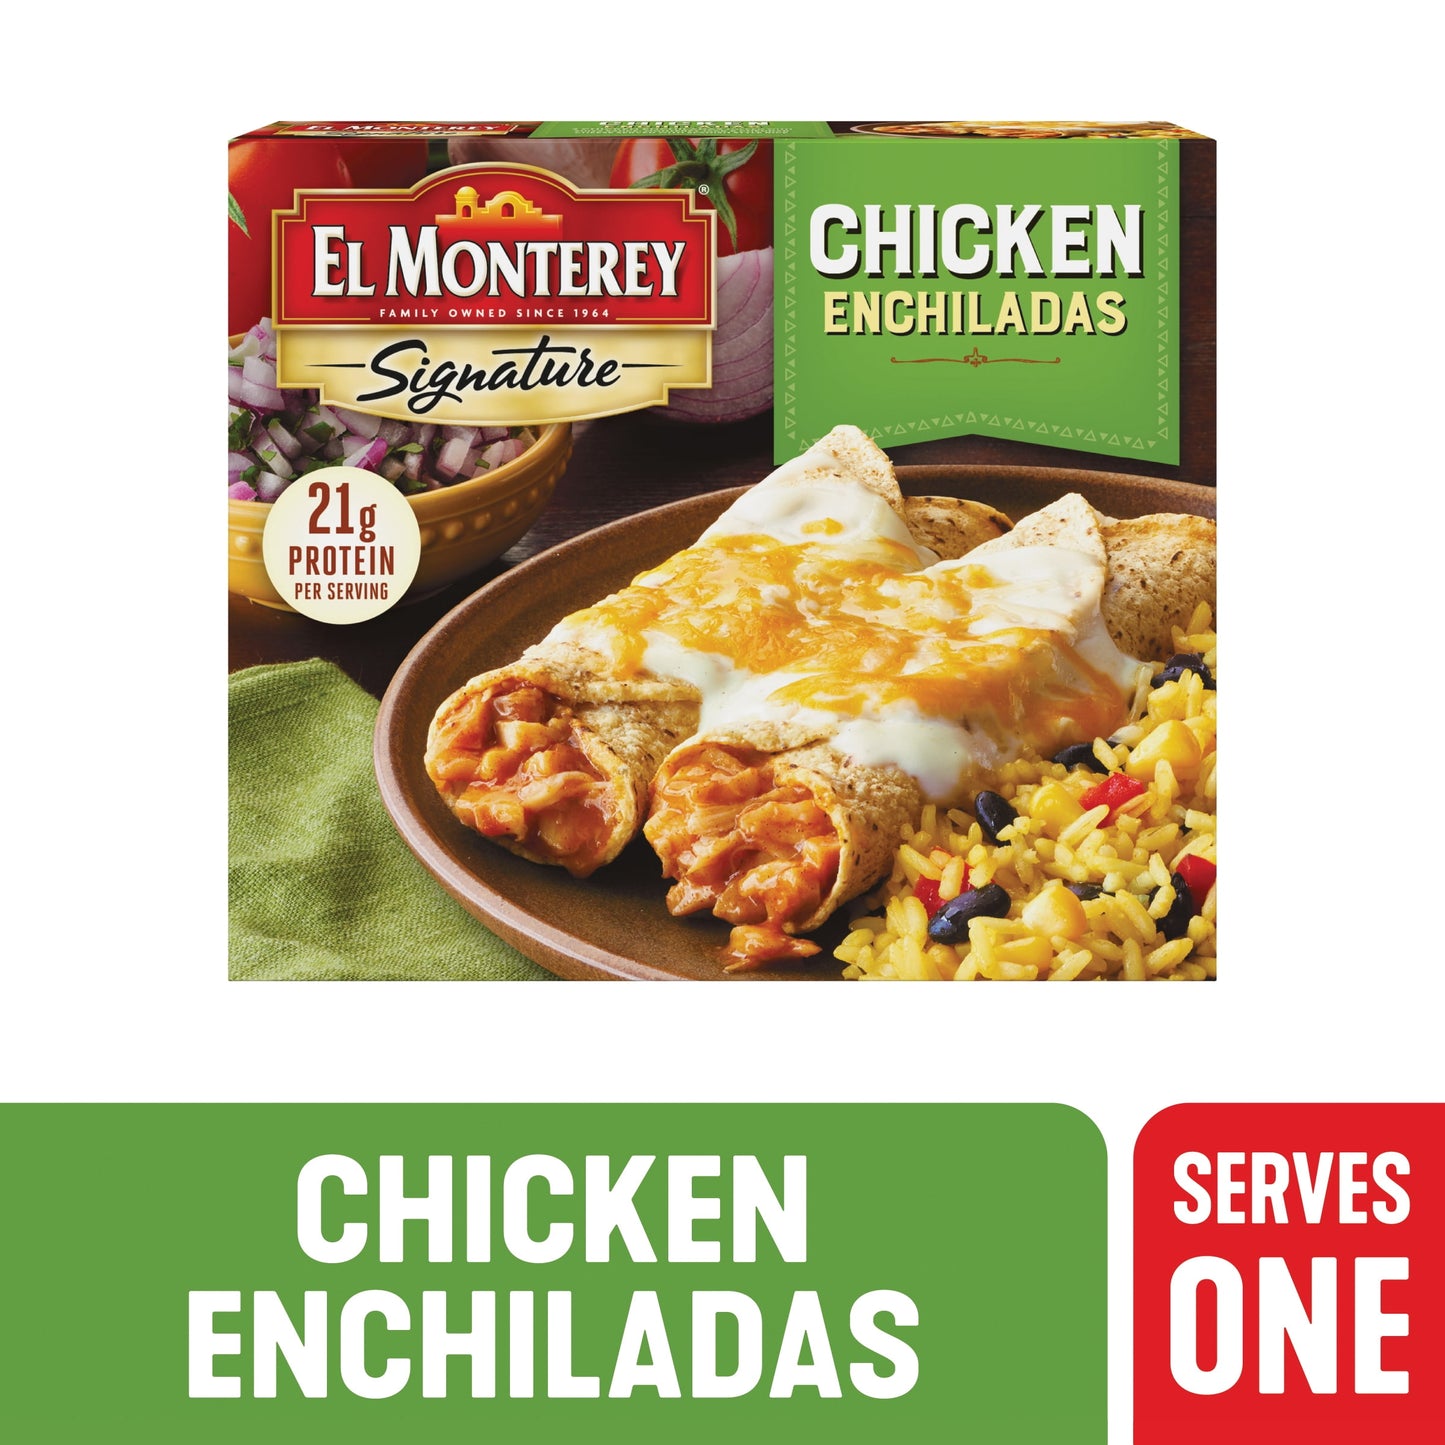 El Monterey Signature Chicken Enchiladas Meal, 10.25 oz Box (Frozen)